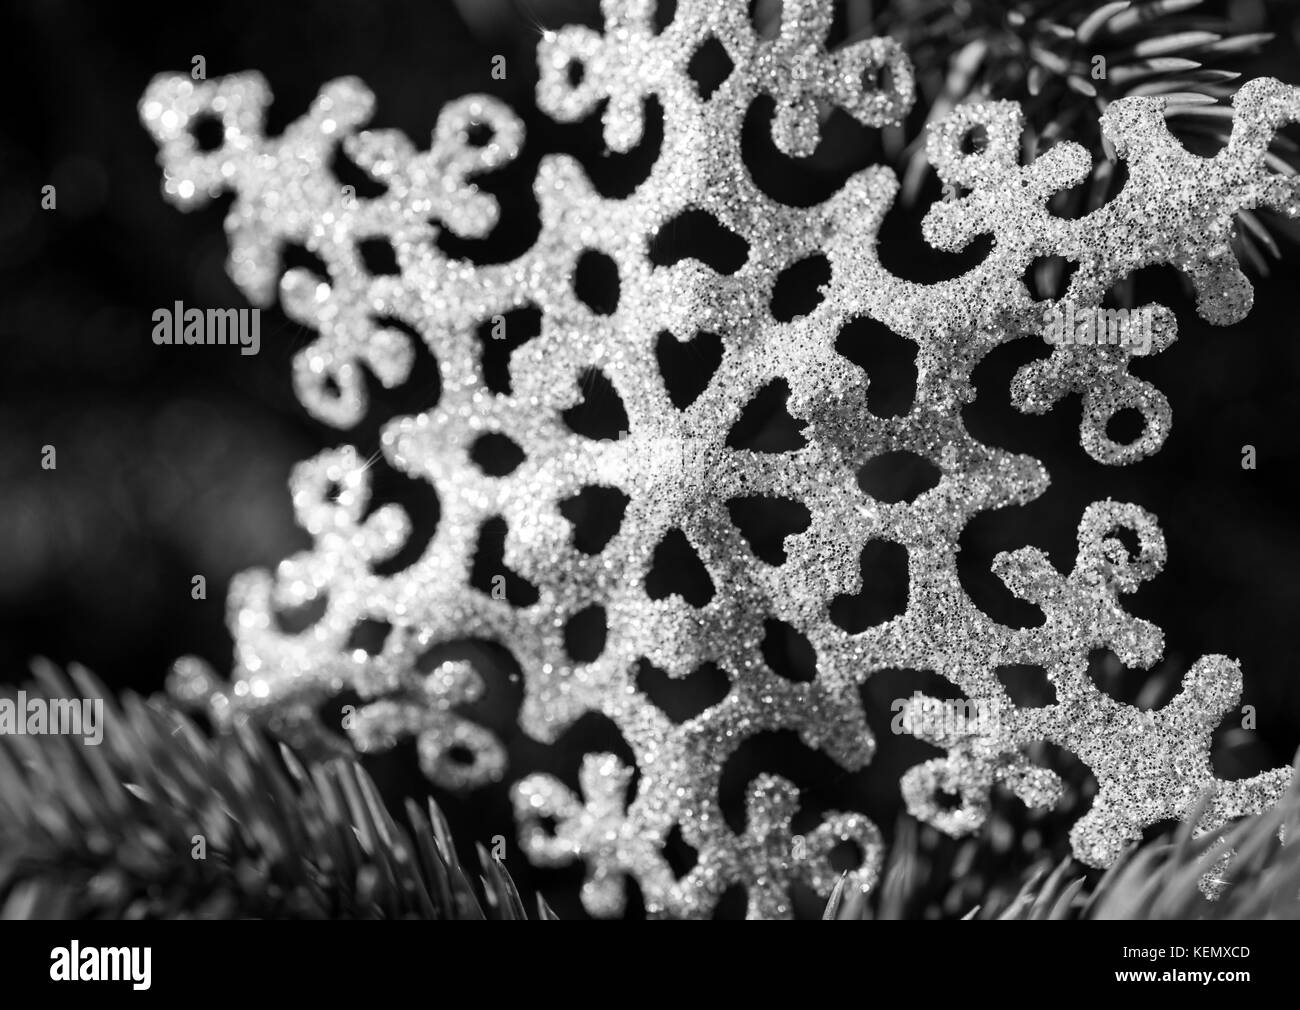 Glitter snowflake Christmas decoration on a tree Stock Photo